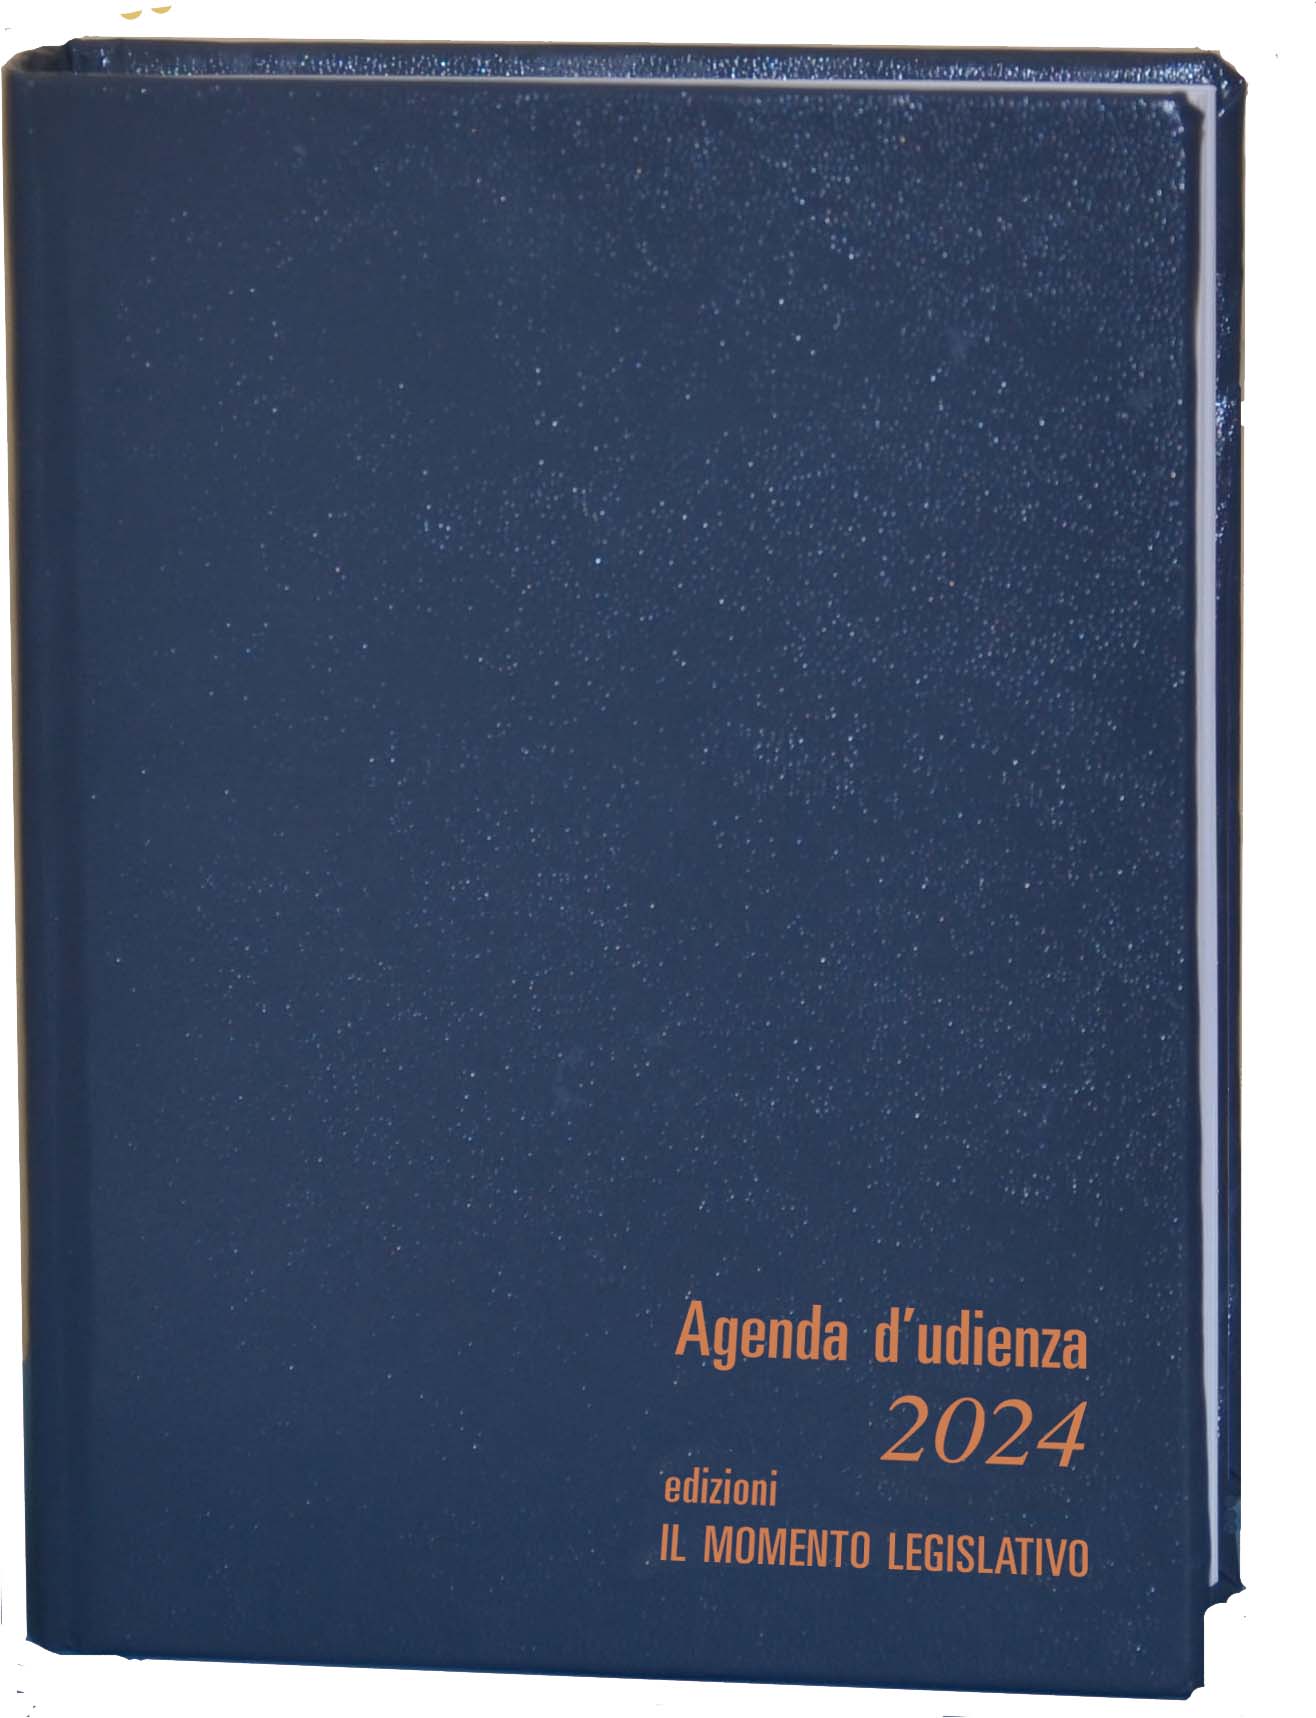 Agenda D'Udienza 2024 – Verticale – Momento Legislativo